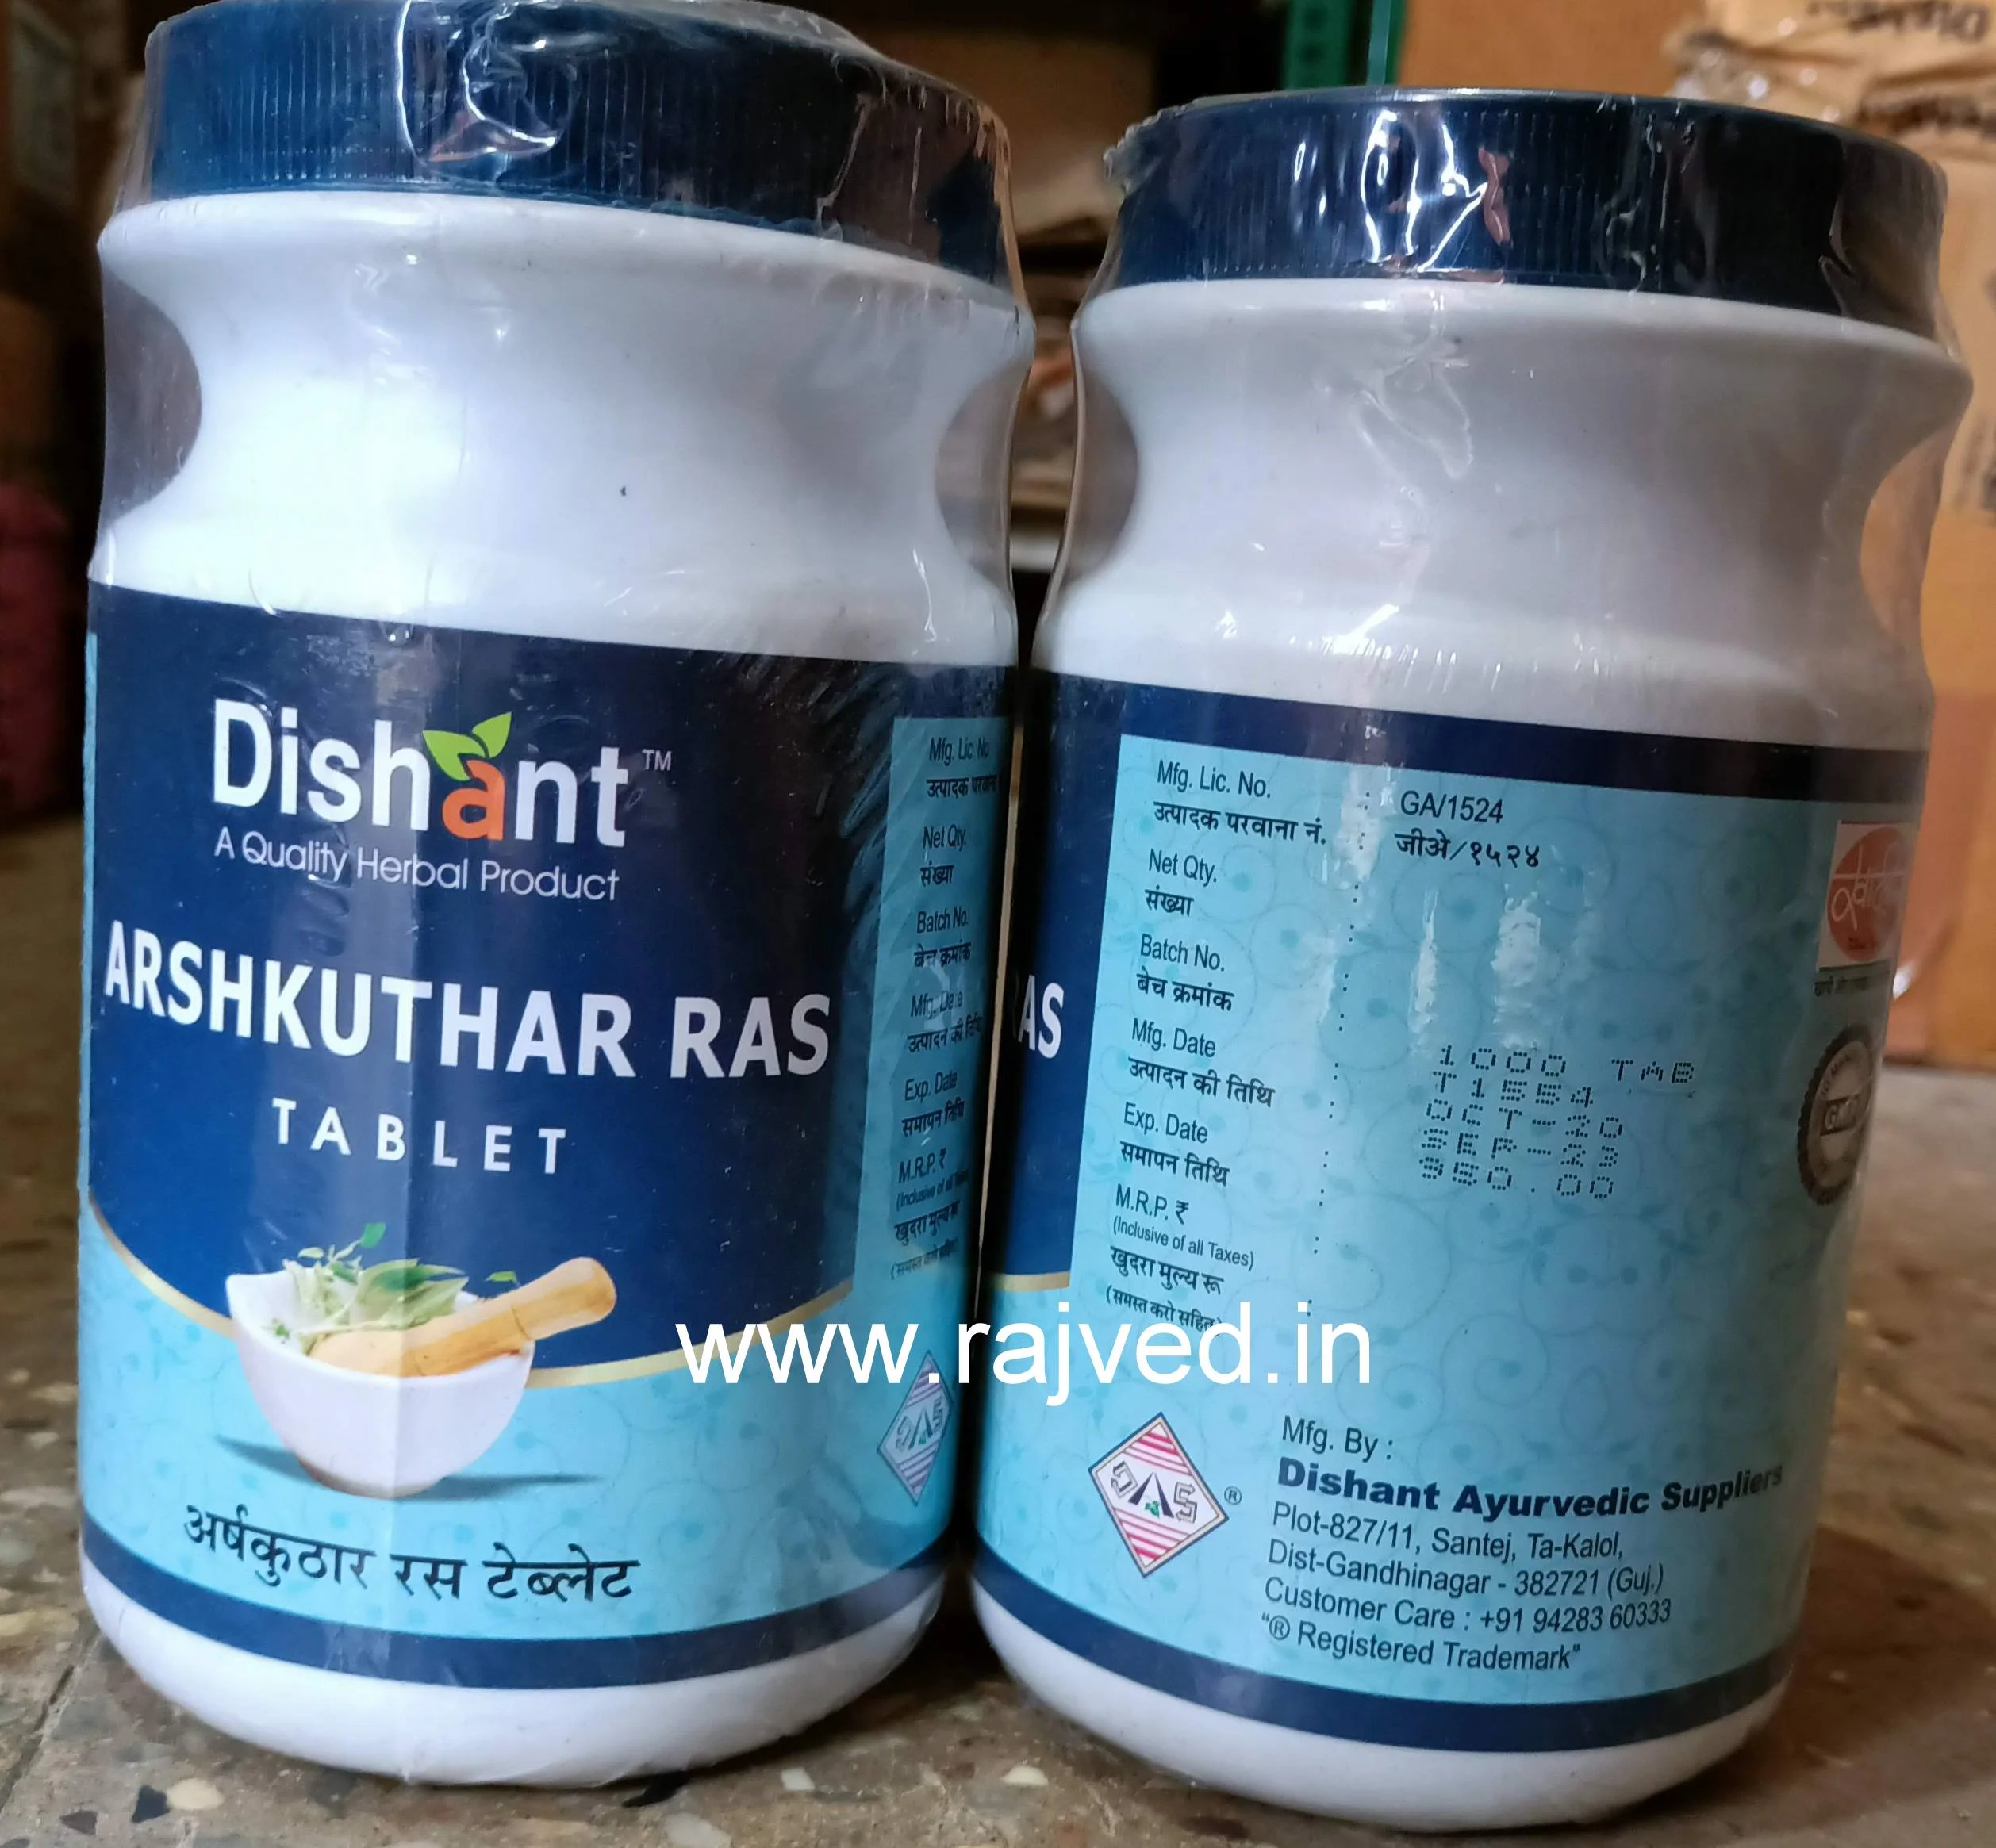 arshkuthar ras tablets 500 gm upto 20% off dishant ayurvedic suppliers